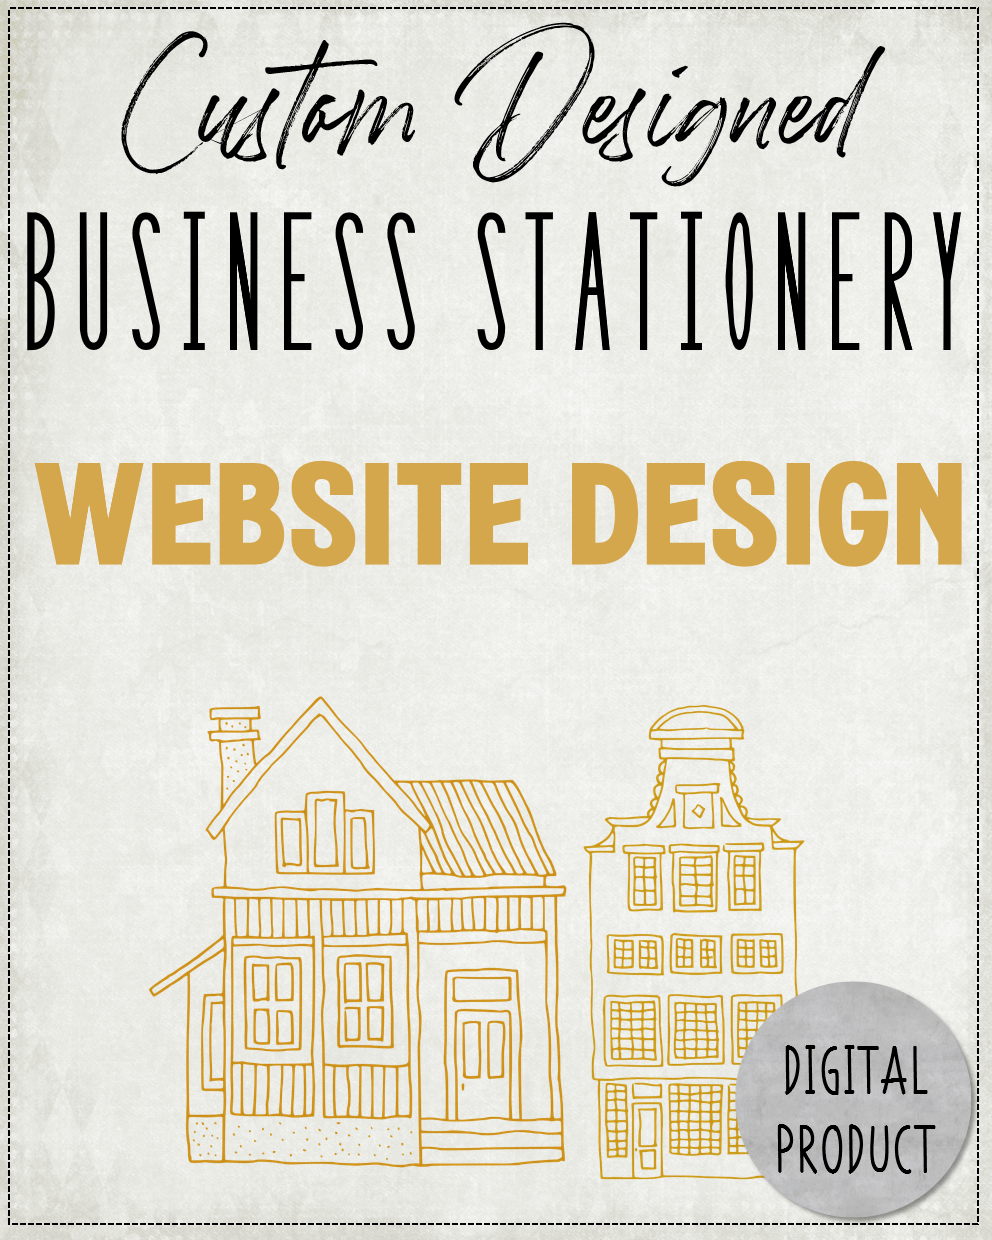 CUSTOM DESIGNED: Business Stationery - Website Design